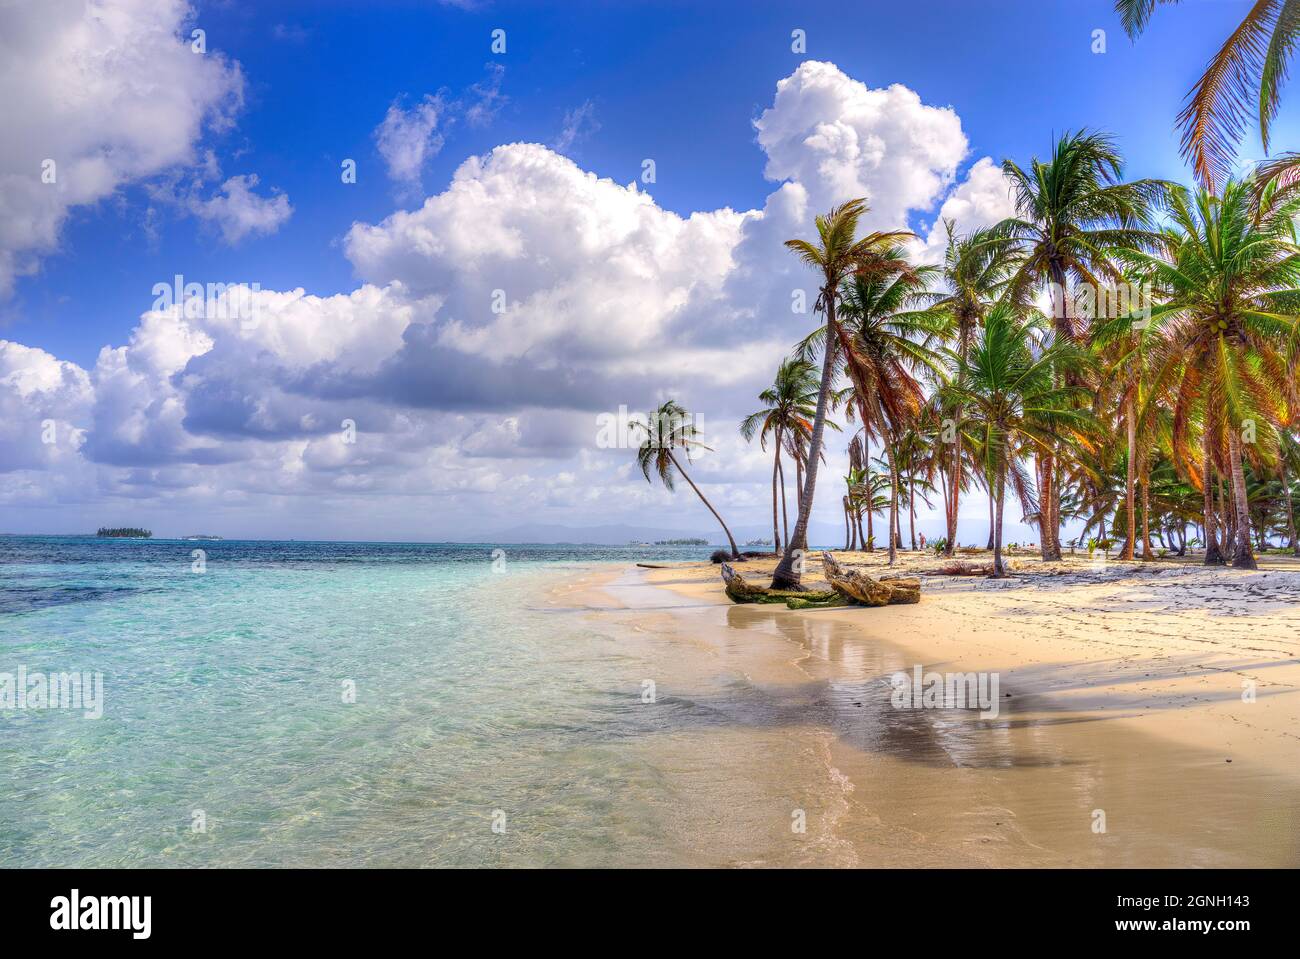 Tropical Island with palm trees in Kuna Yala Islands, San Blas Panama Stock Photo